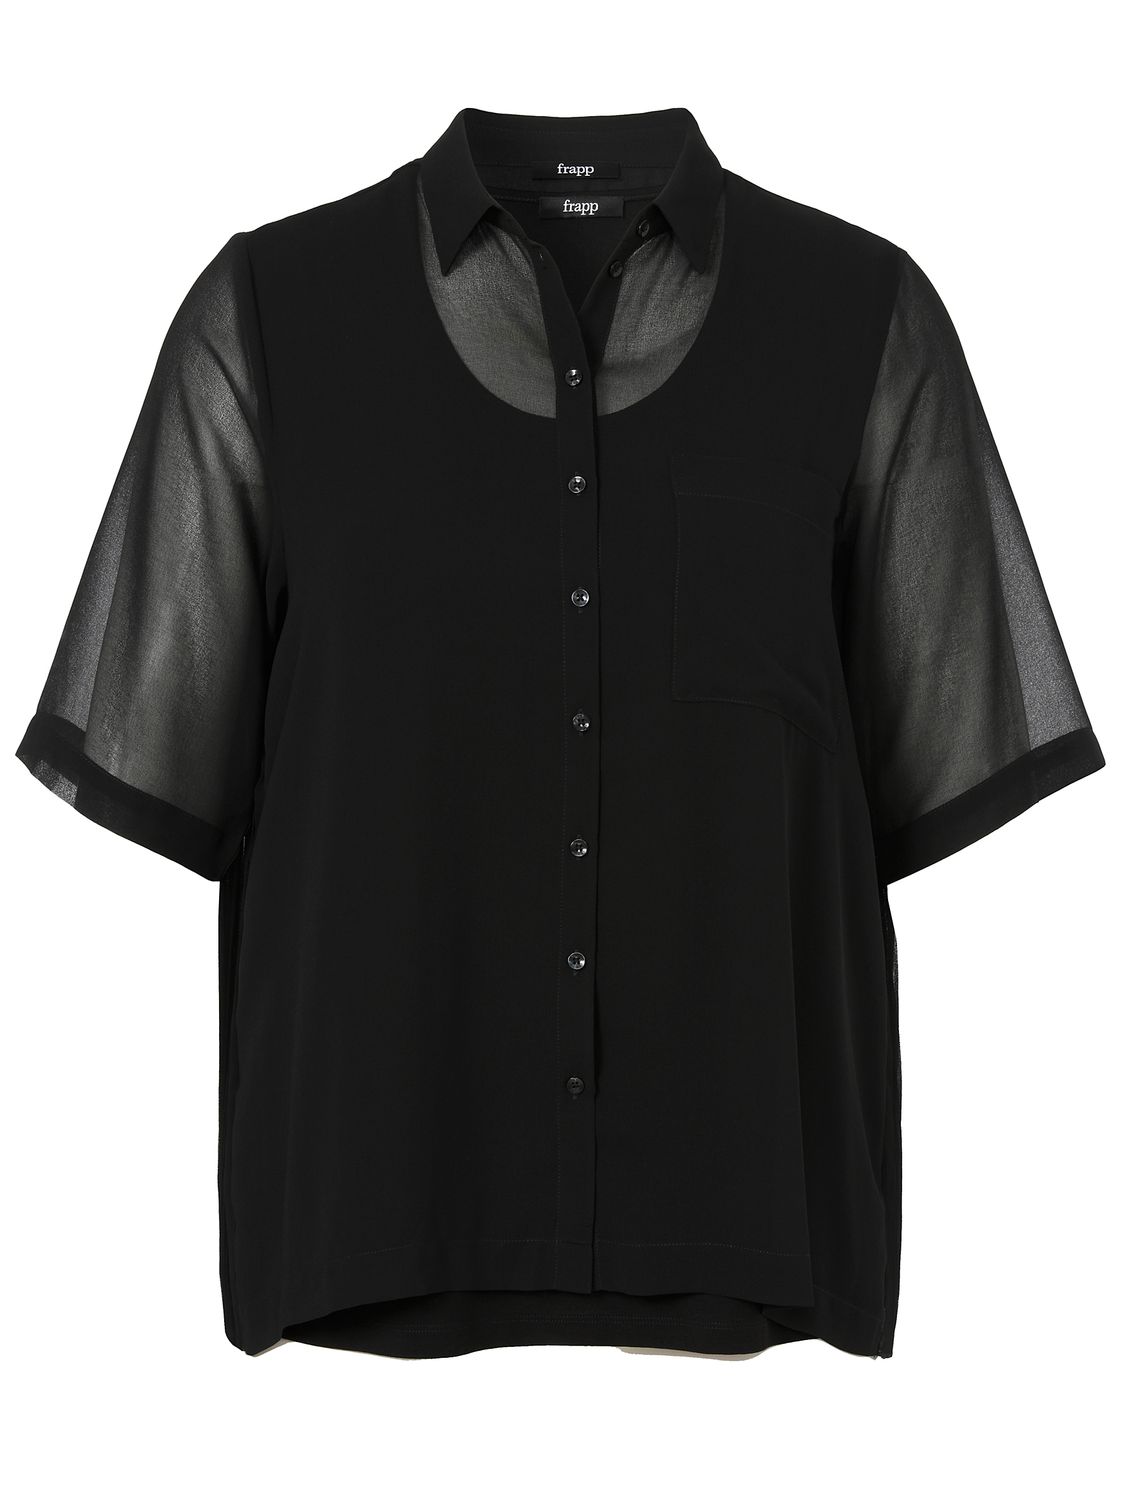 Frapp blouse zwart 2453726, Size: 44